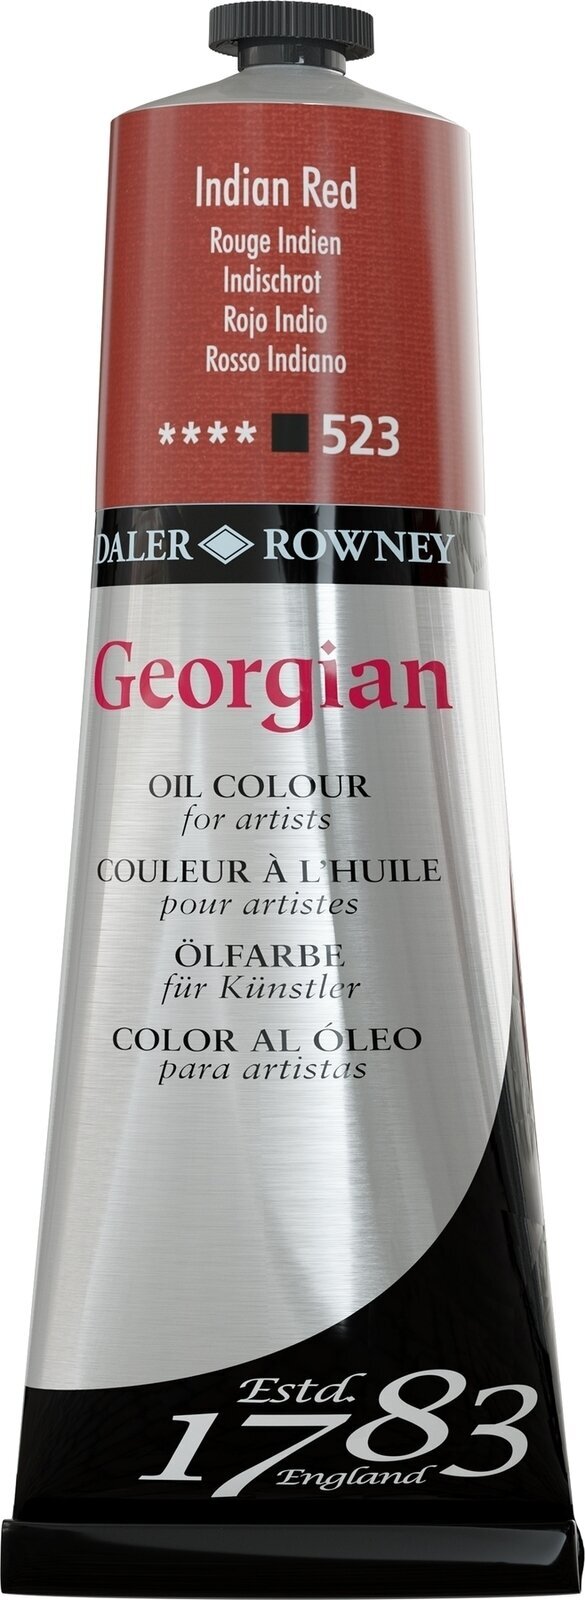 Oil colour Daler Rowney Georgian Oil Paint Indian Red 225 ml 1 pc